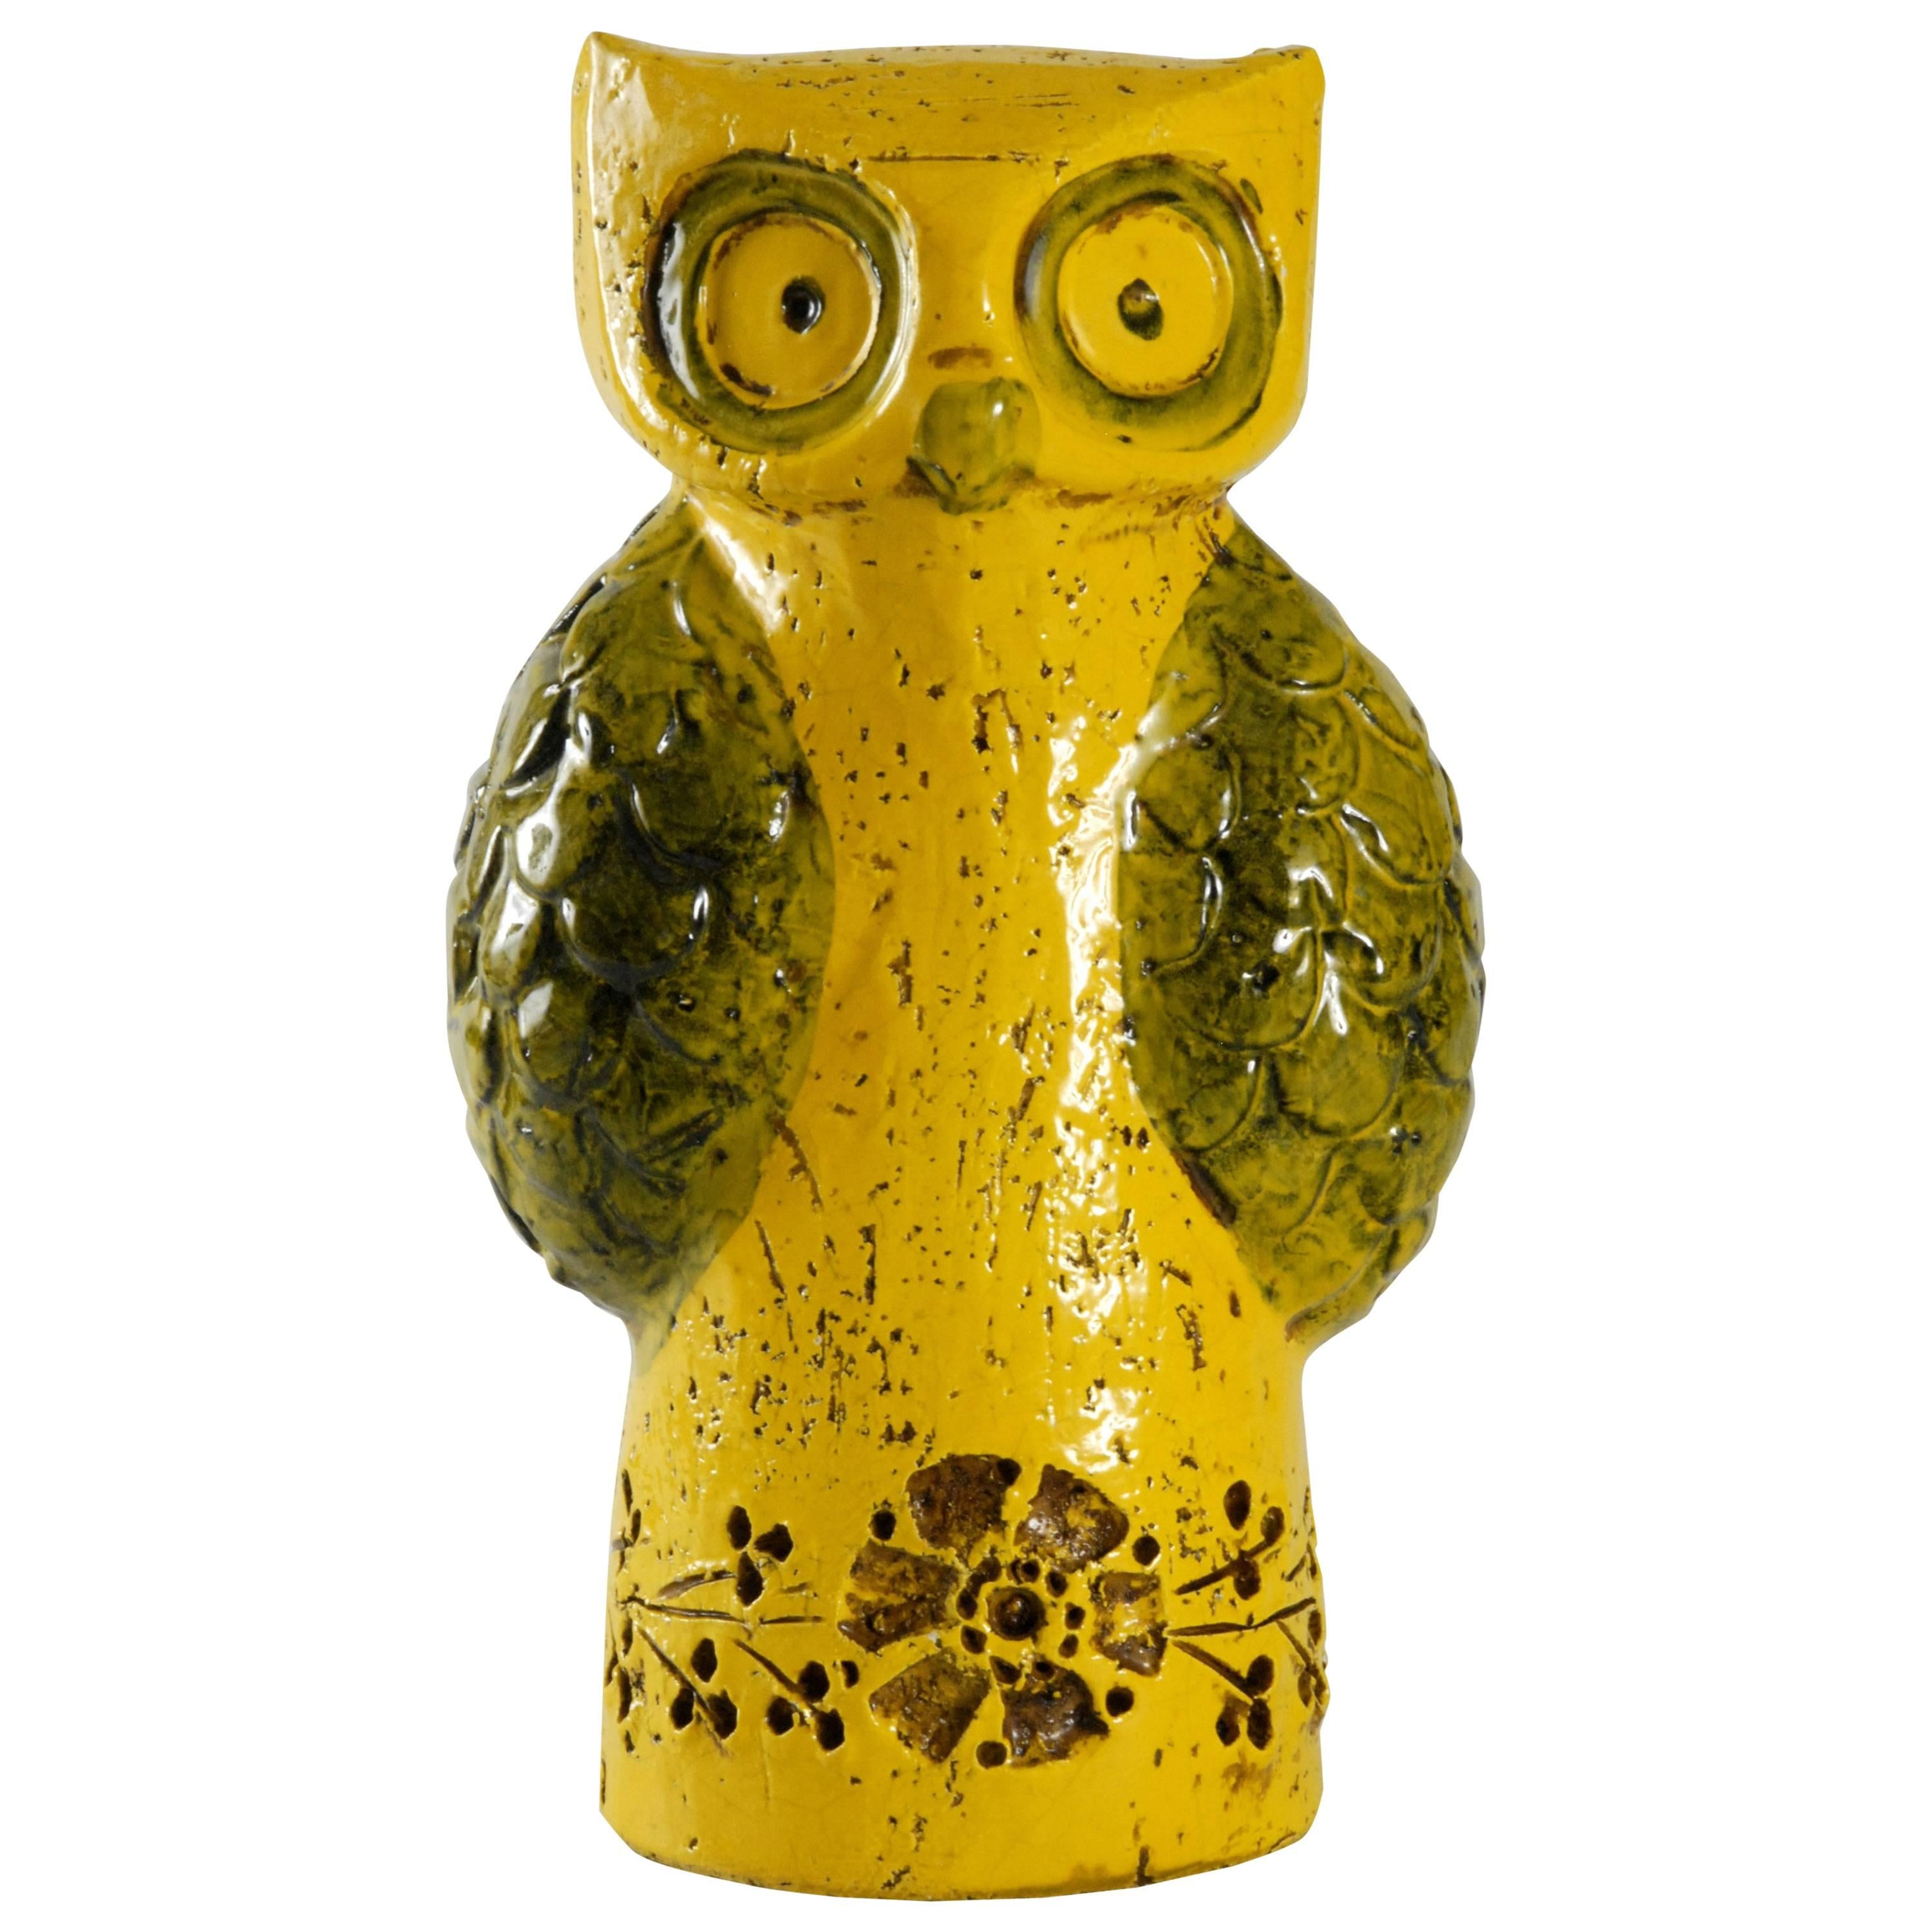 Bitossi Aldo Londi Yellow Owl, Italy, circa 1965